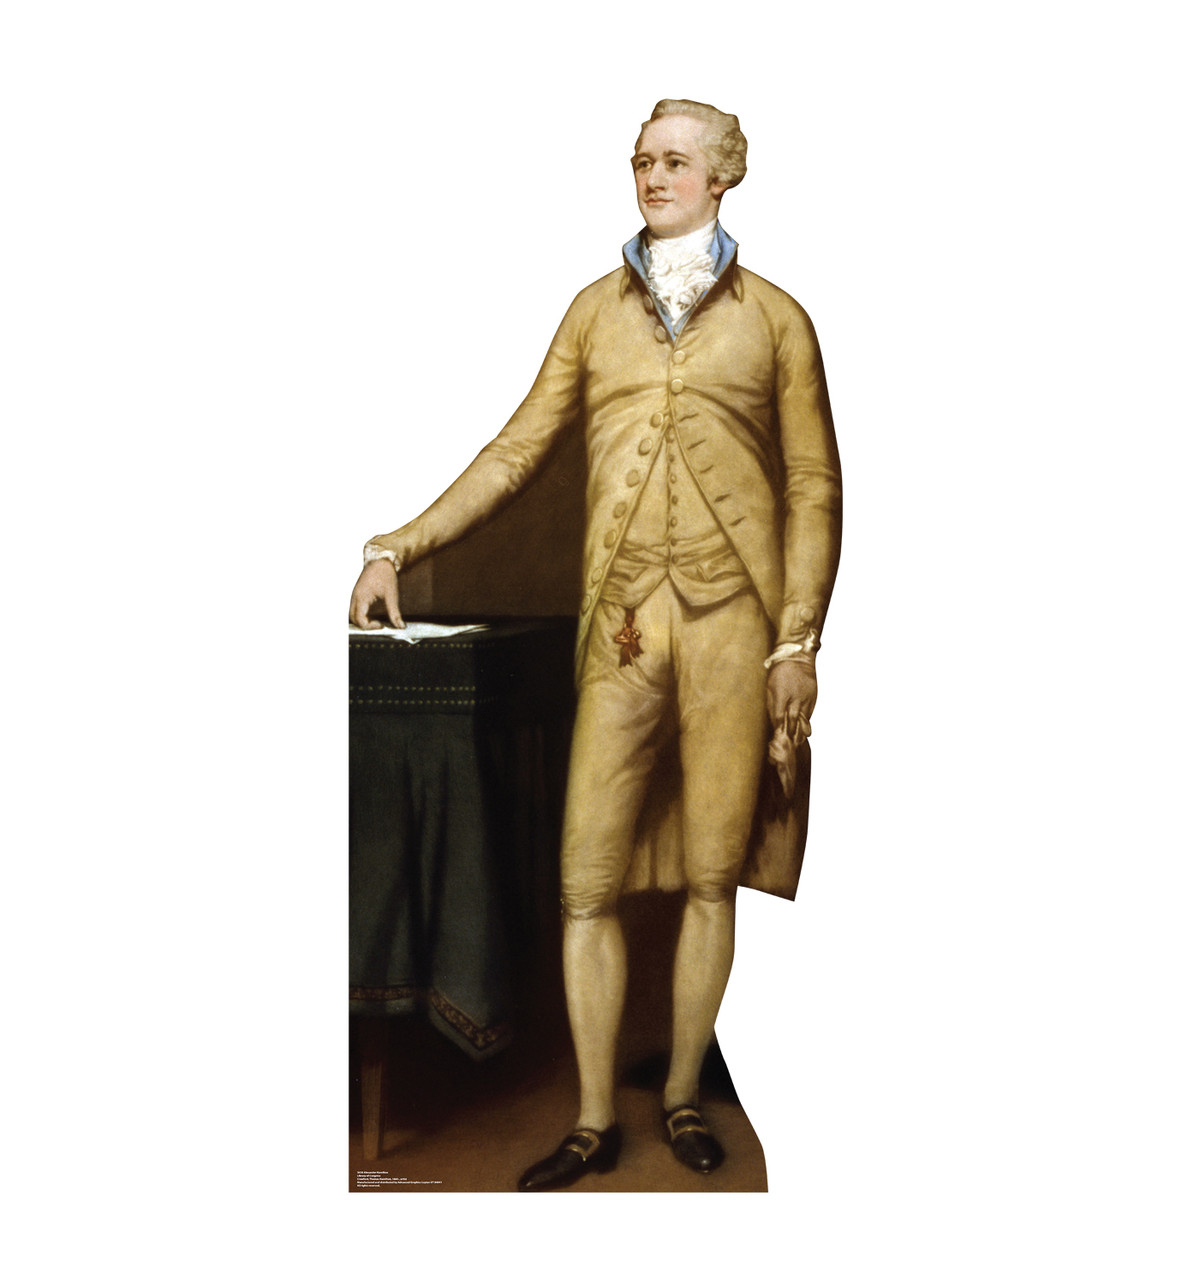 Life-size cardboard standee of Alexander Hamilton.